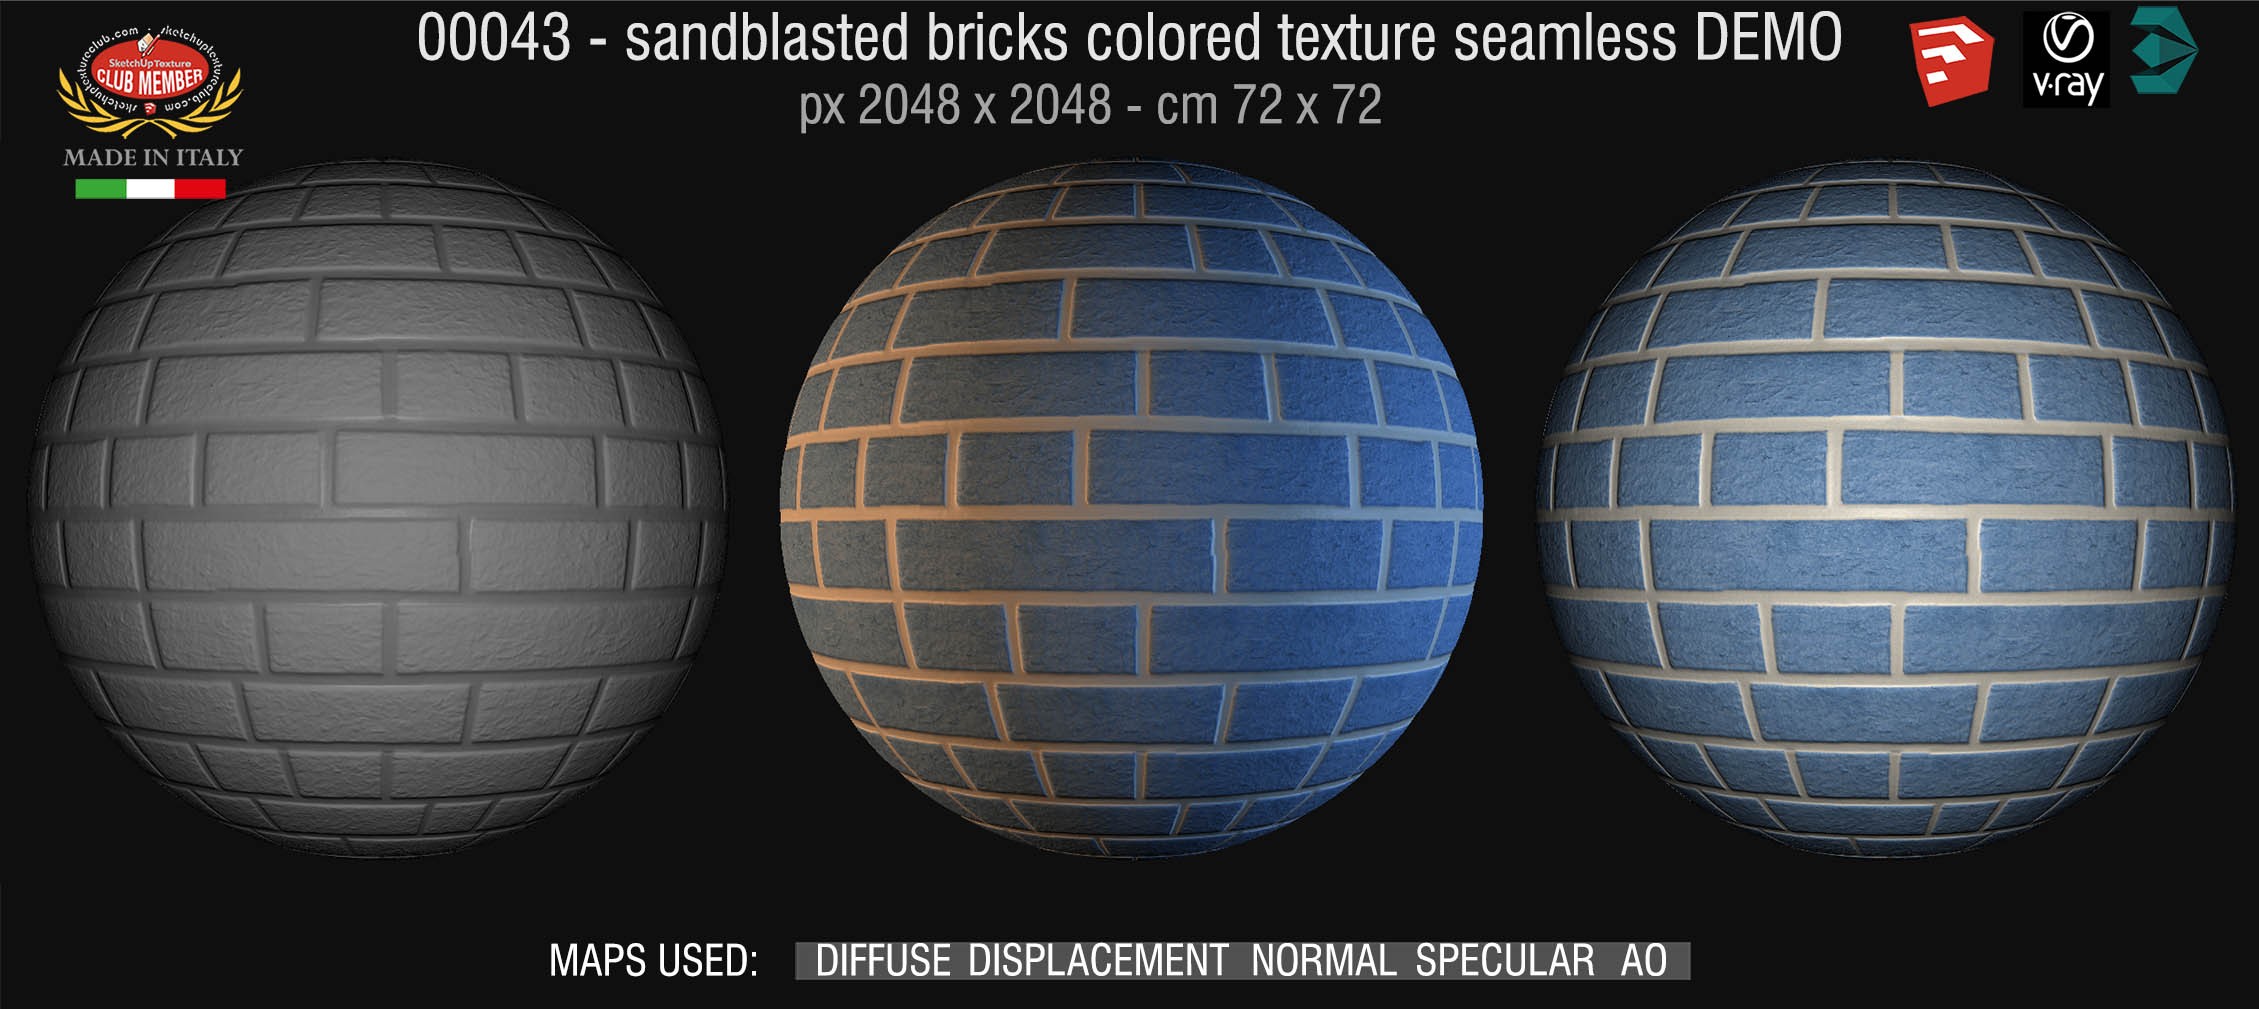 00043 Sandblasted bricks colored texture seamless + maps DEMO